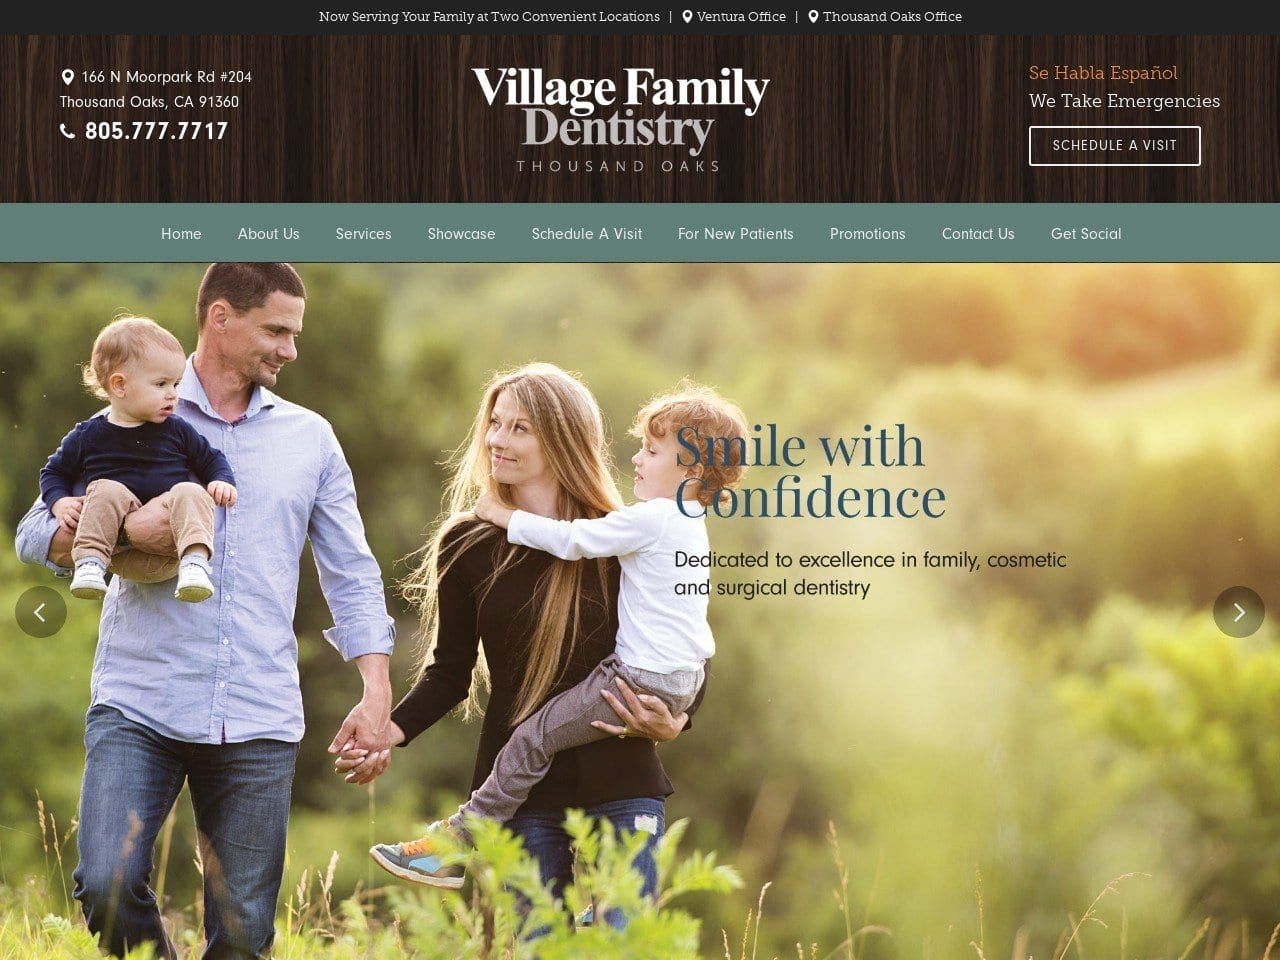 Village Family Dentist Website Screenshot from yourthousandoaksdentist.com